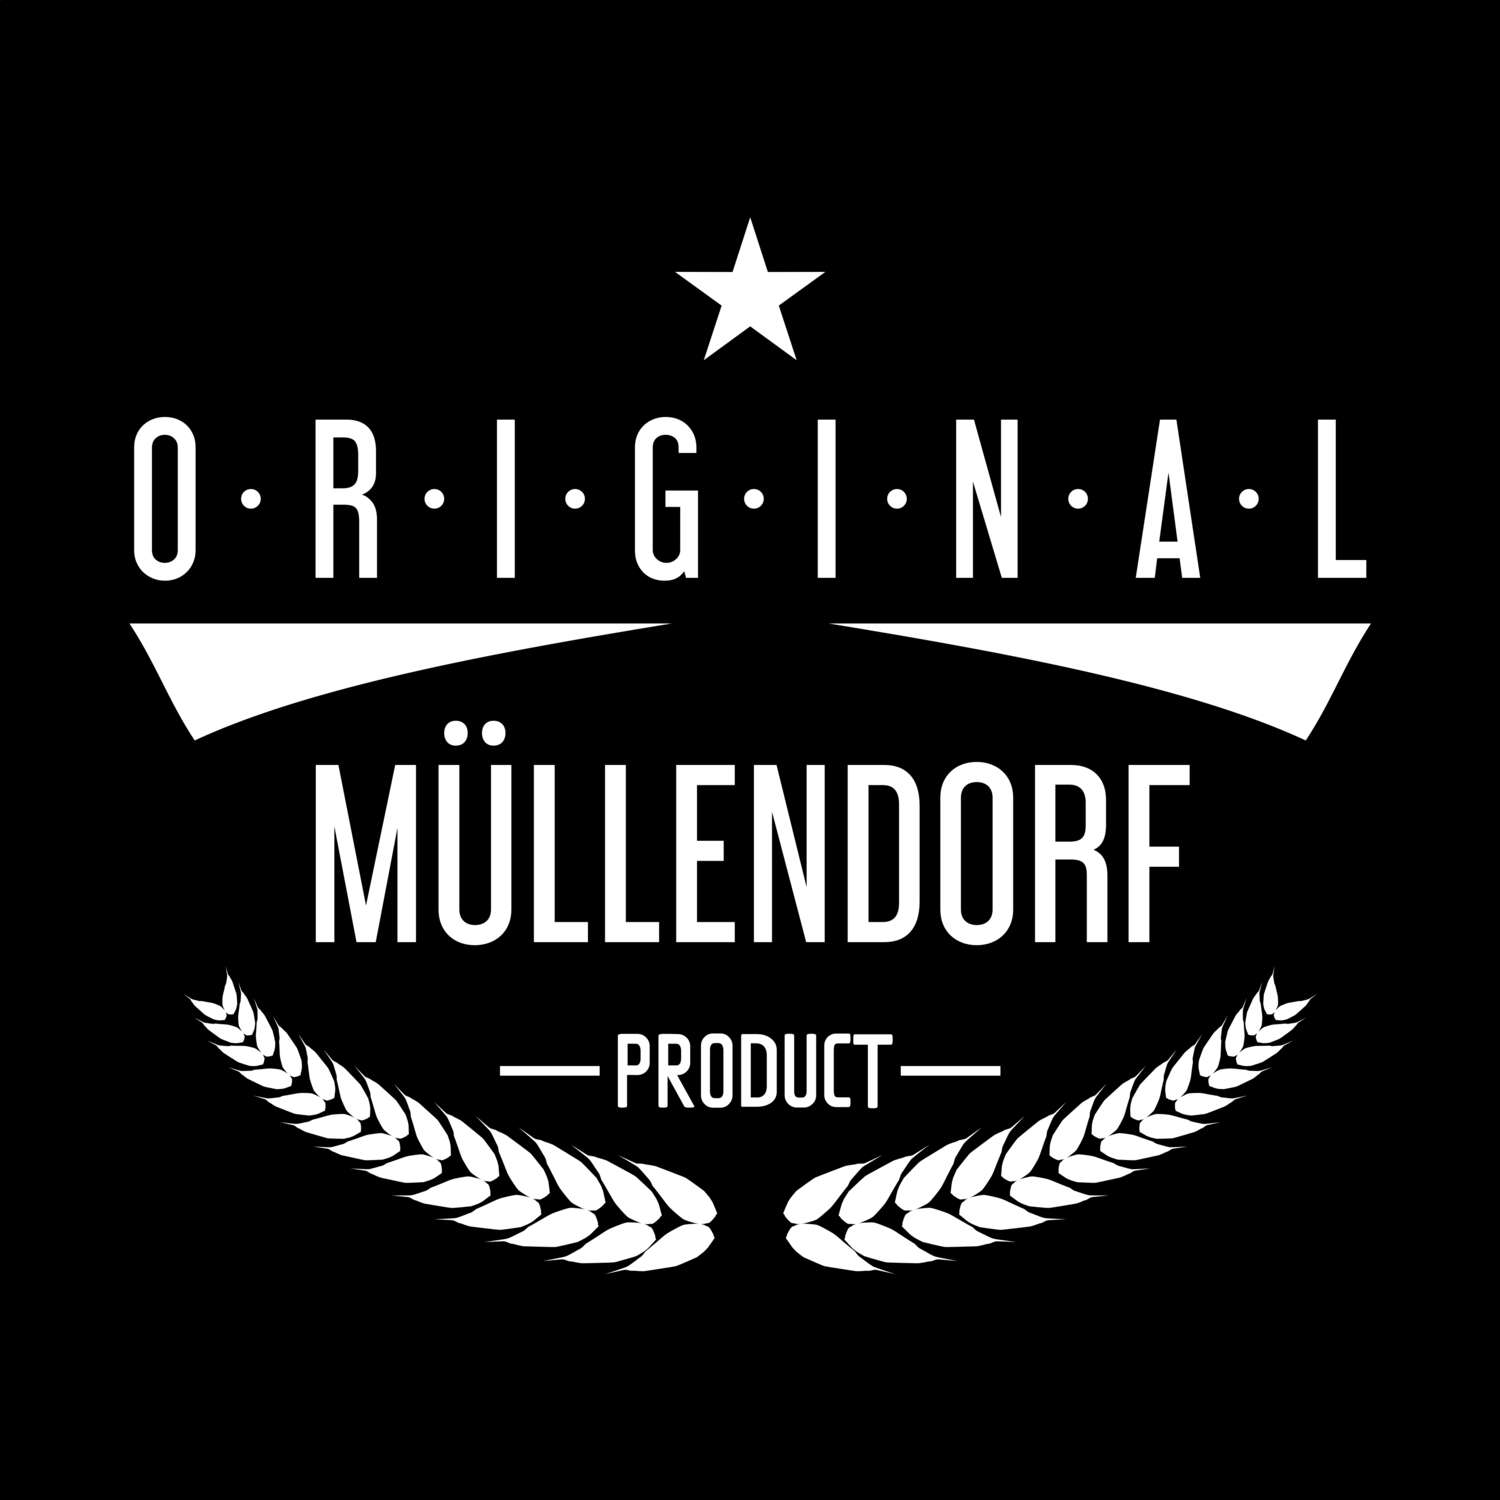 Müllendorf T-Shirt »Original Product«